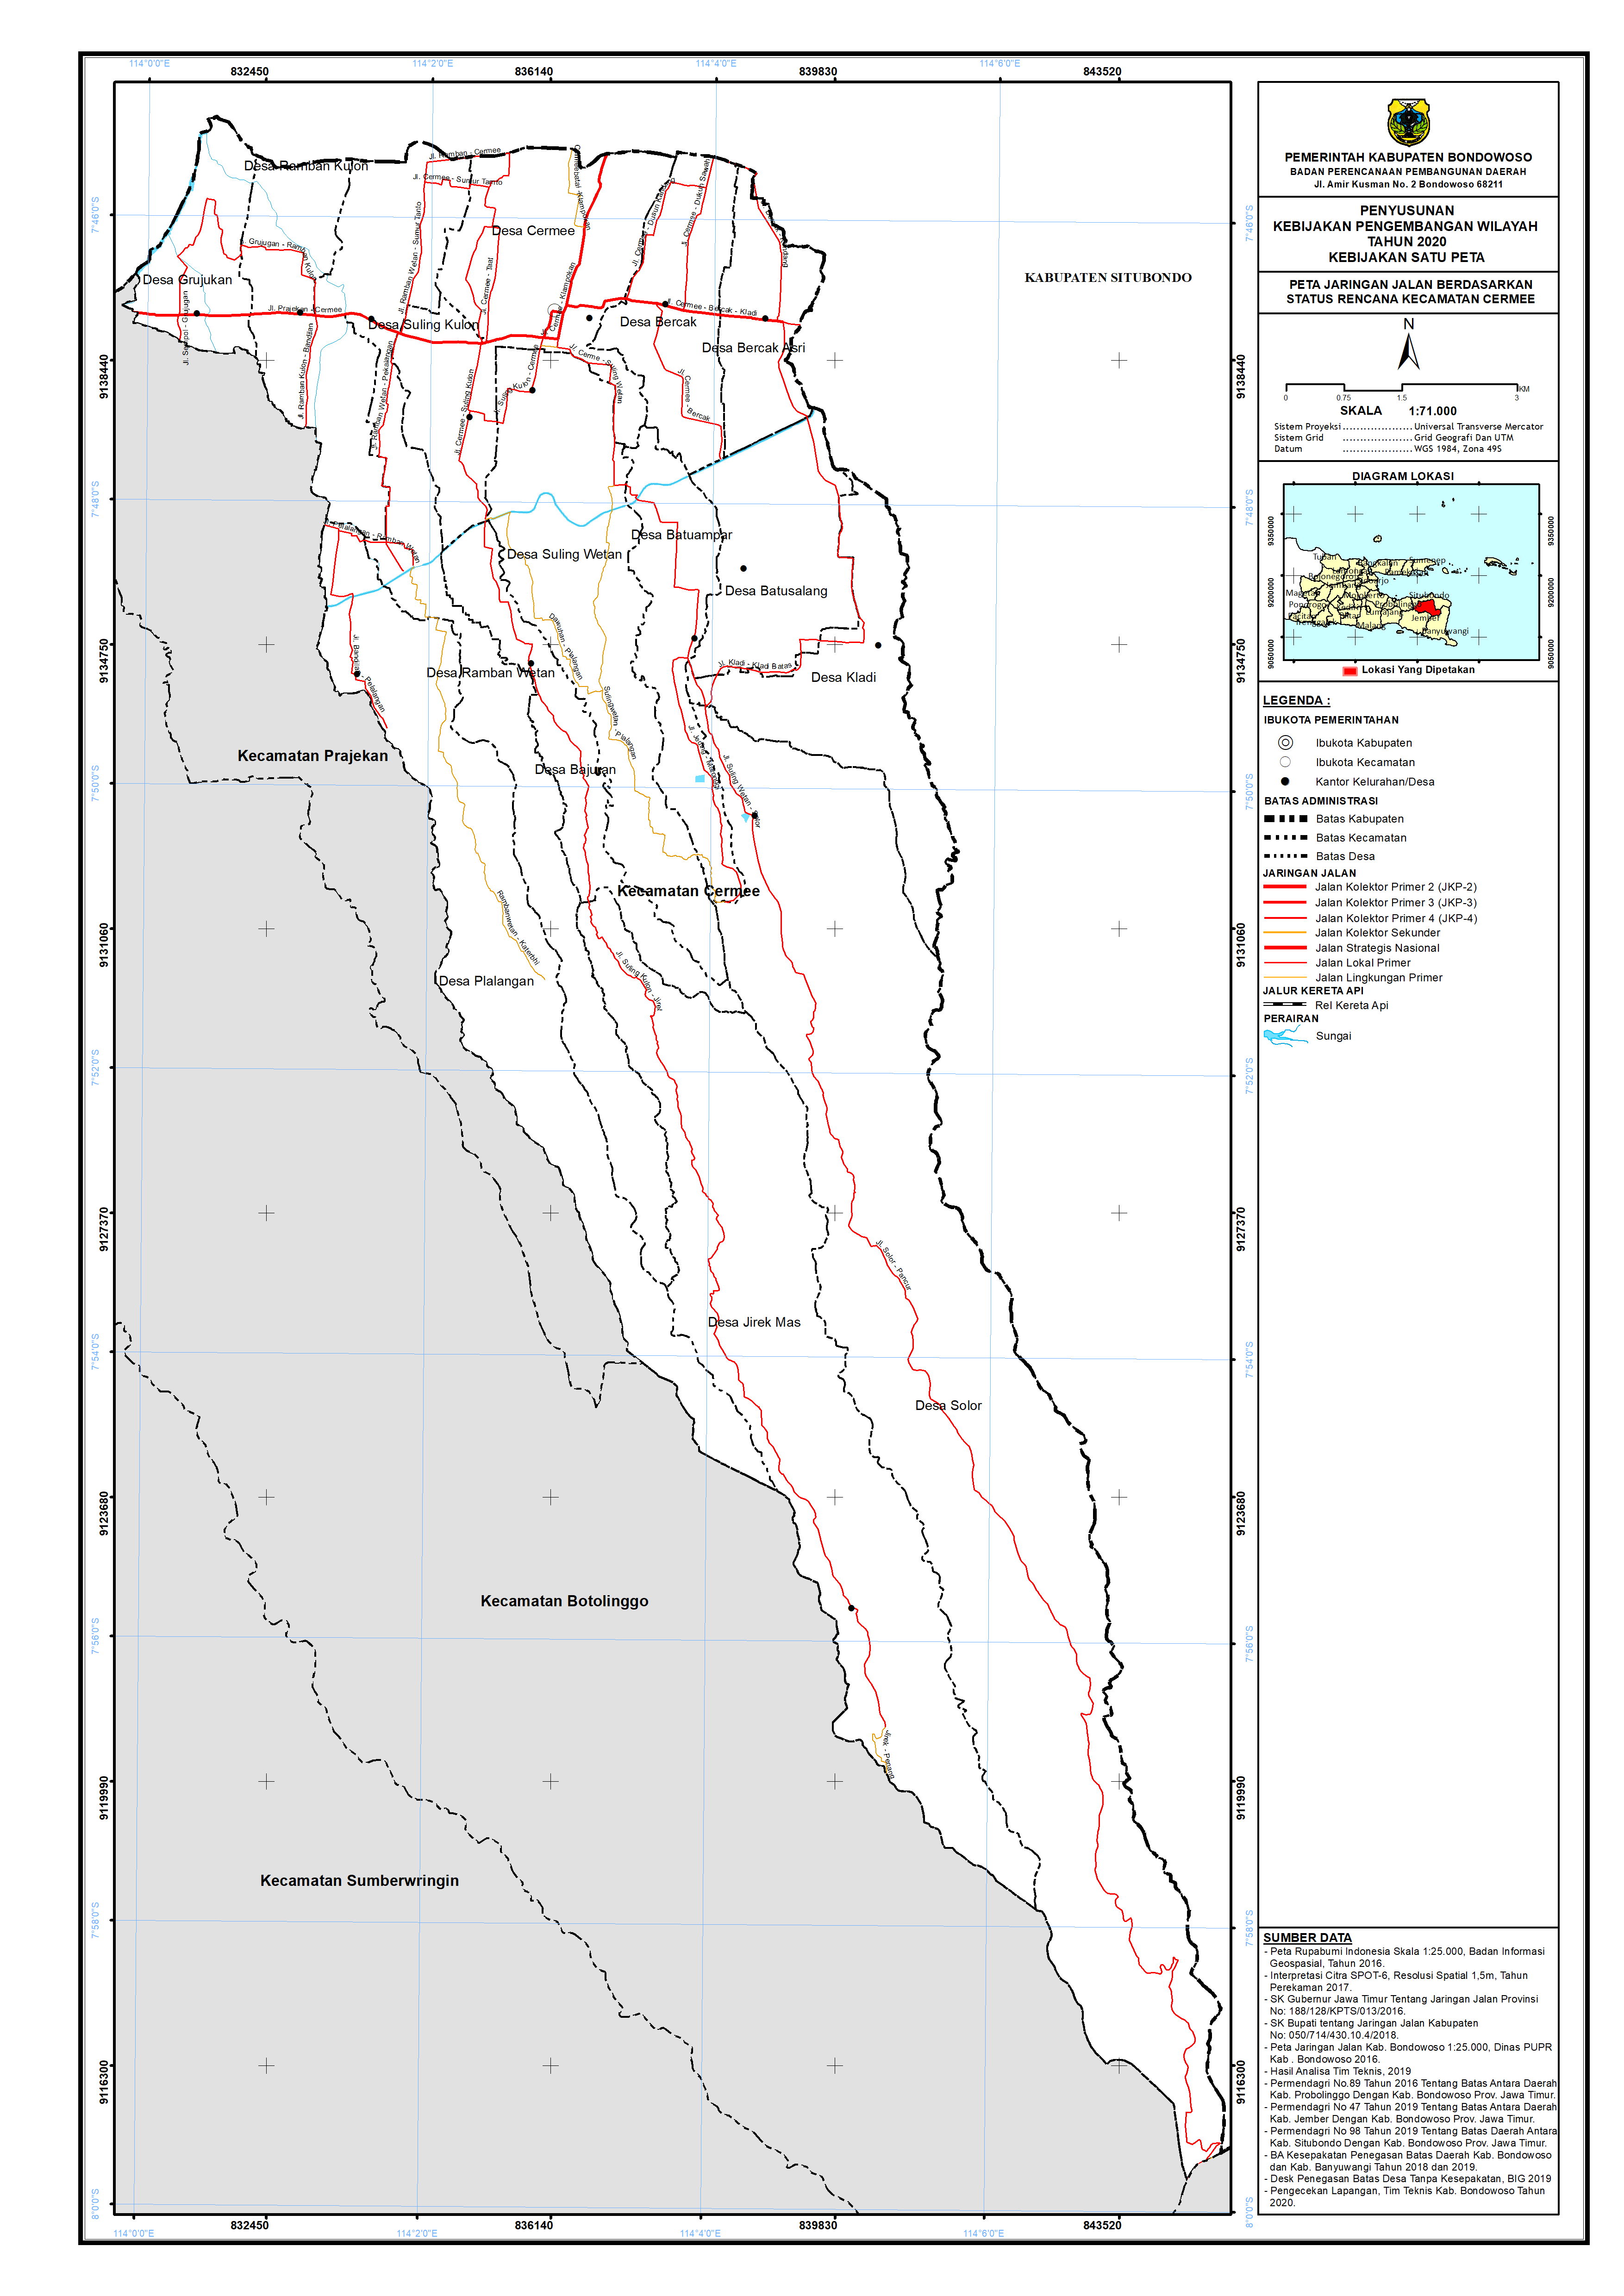 Peta Jaringan Jalan Berdasarkan Status Rencana Kecamatan Cermee.png